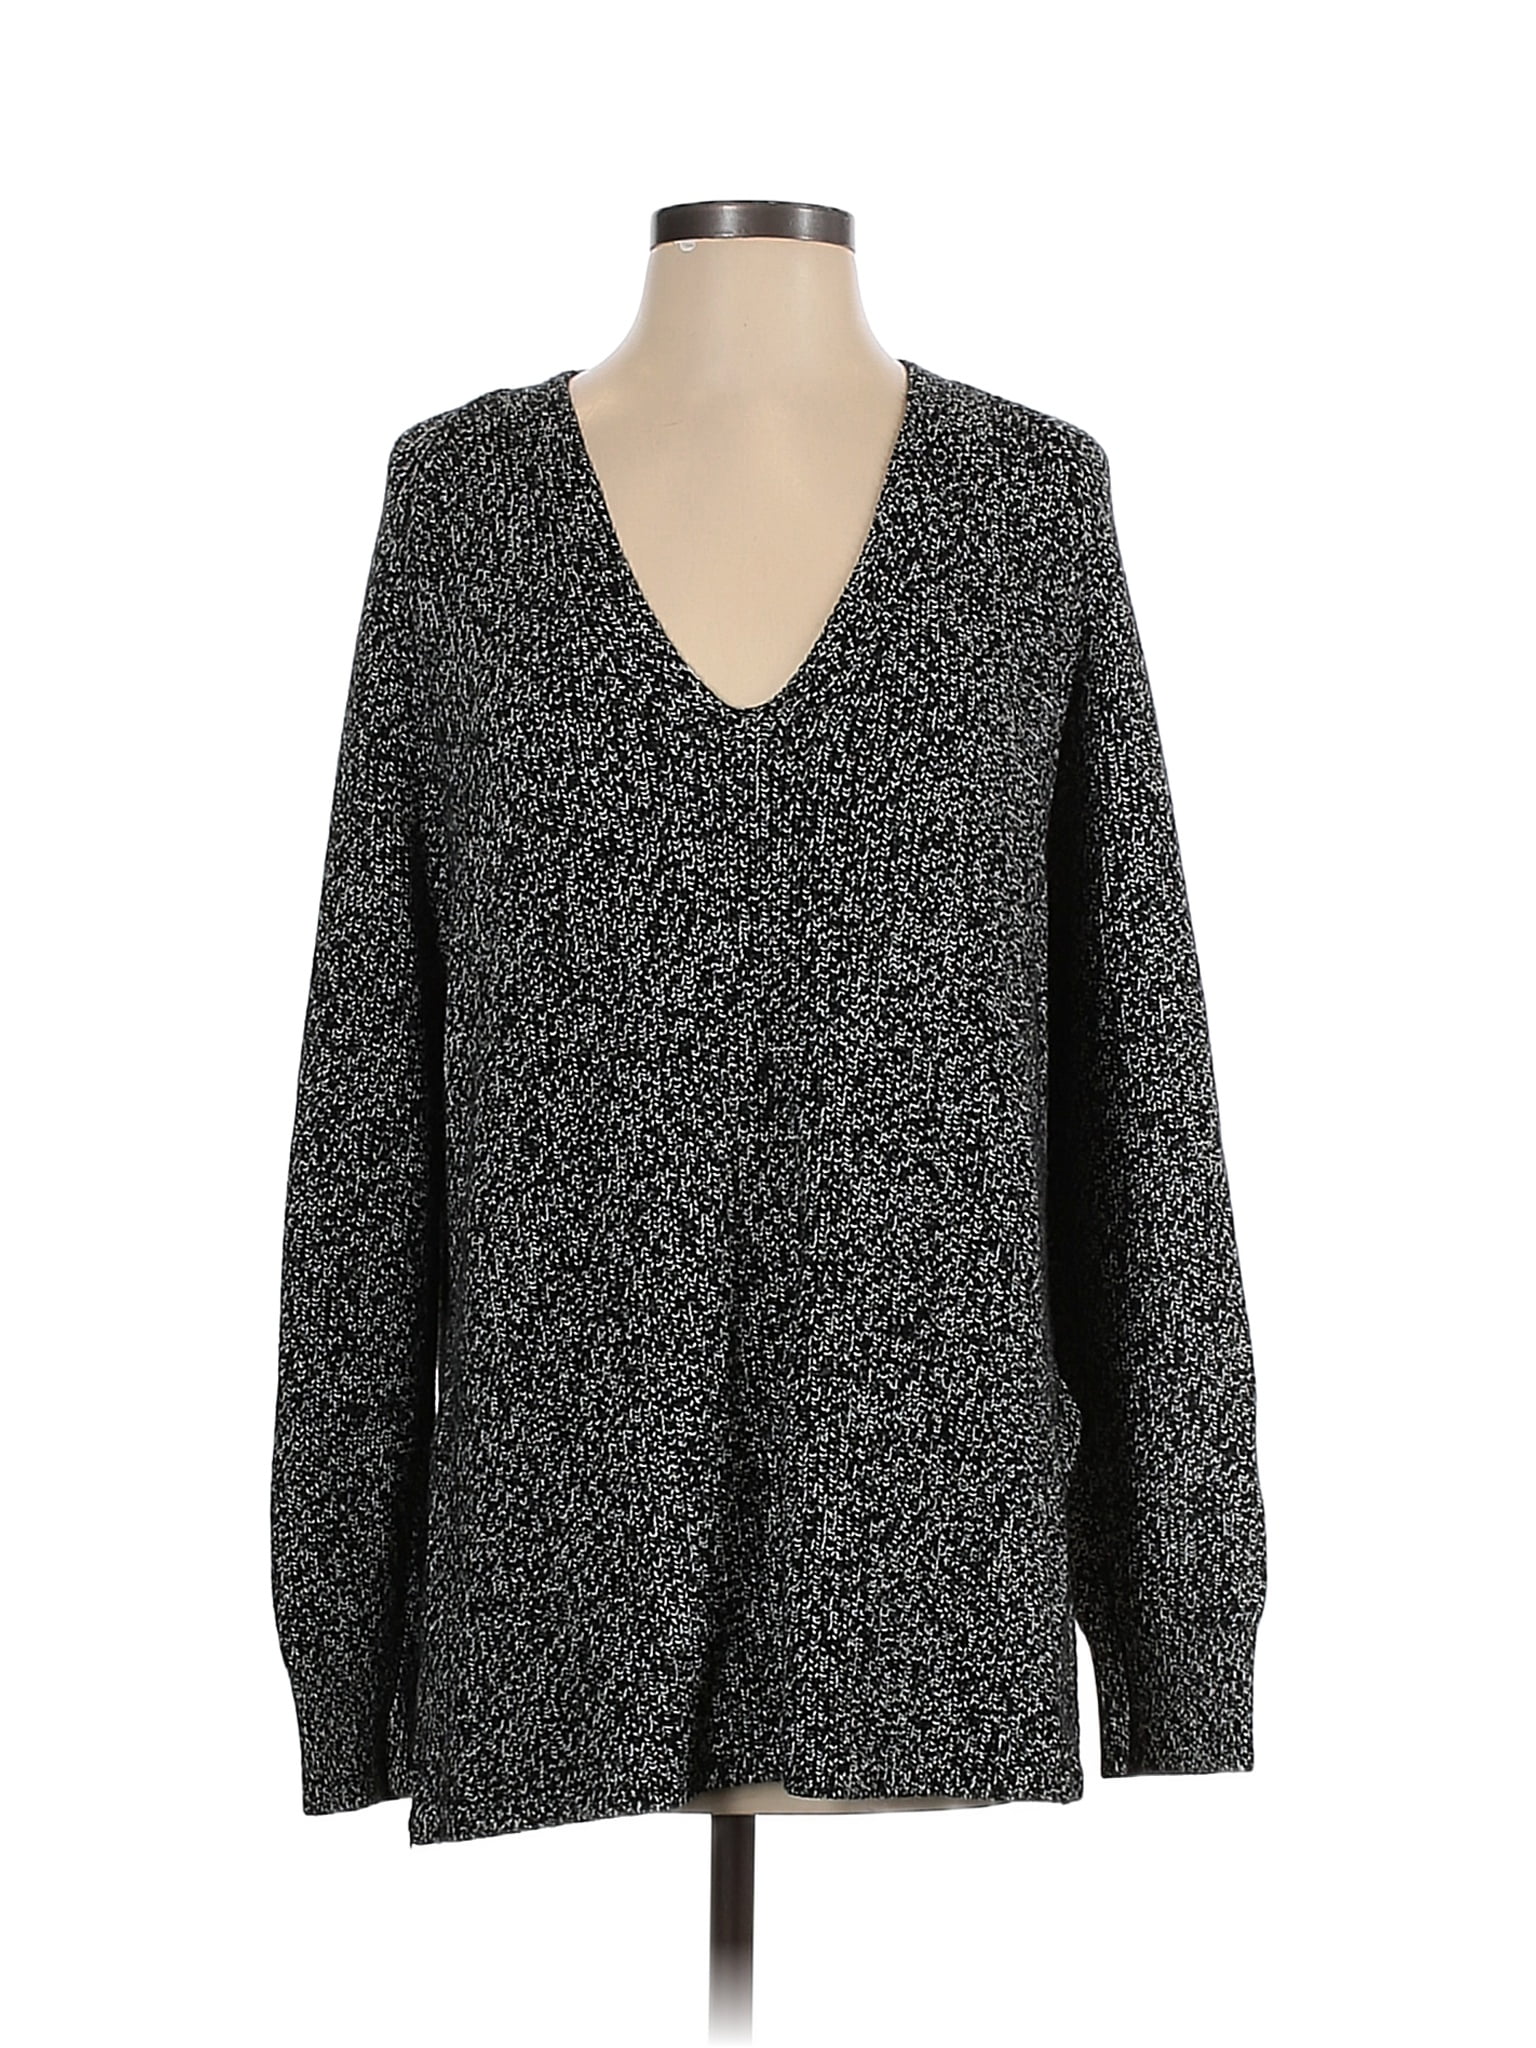 Athleta Color Block Gray Black Pullover Sweater Size S - 65% off | thredUP